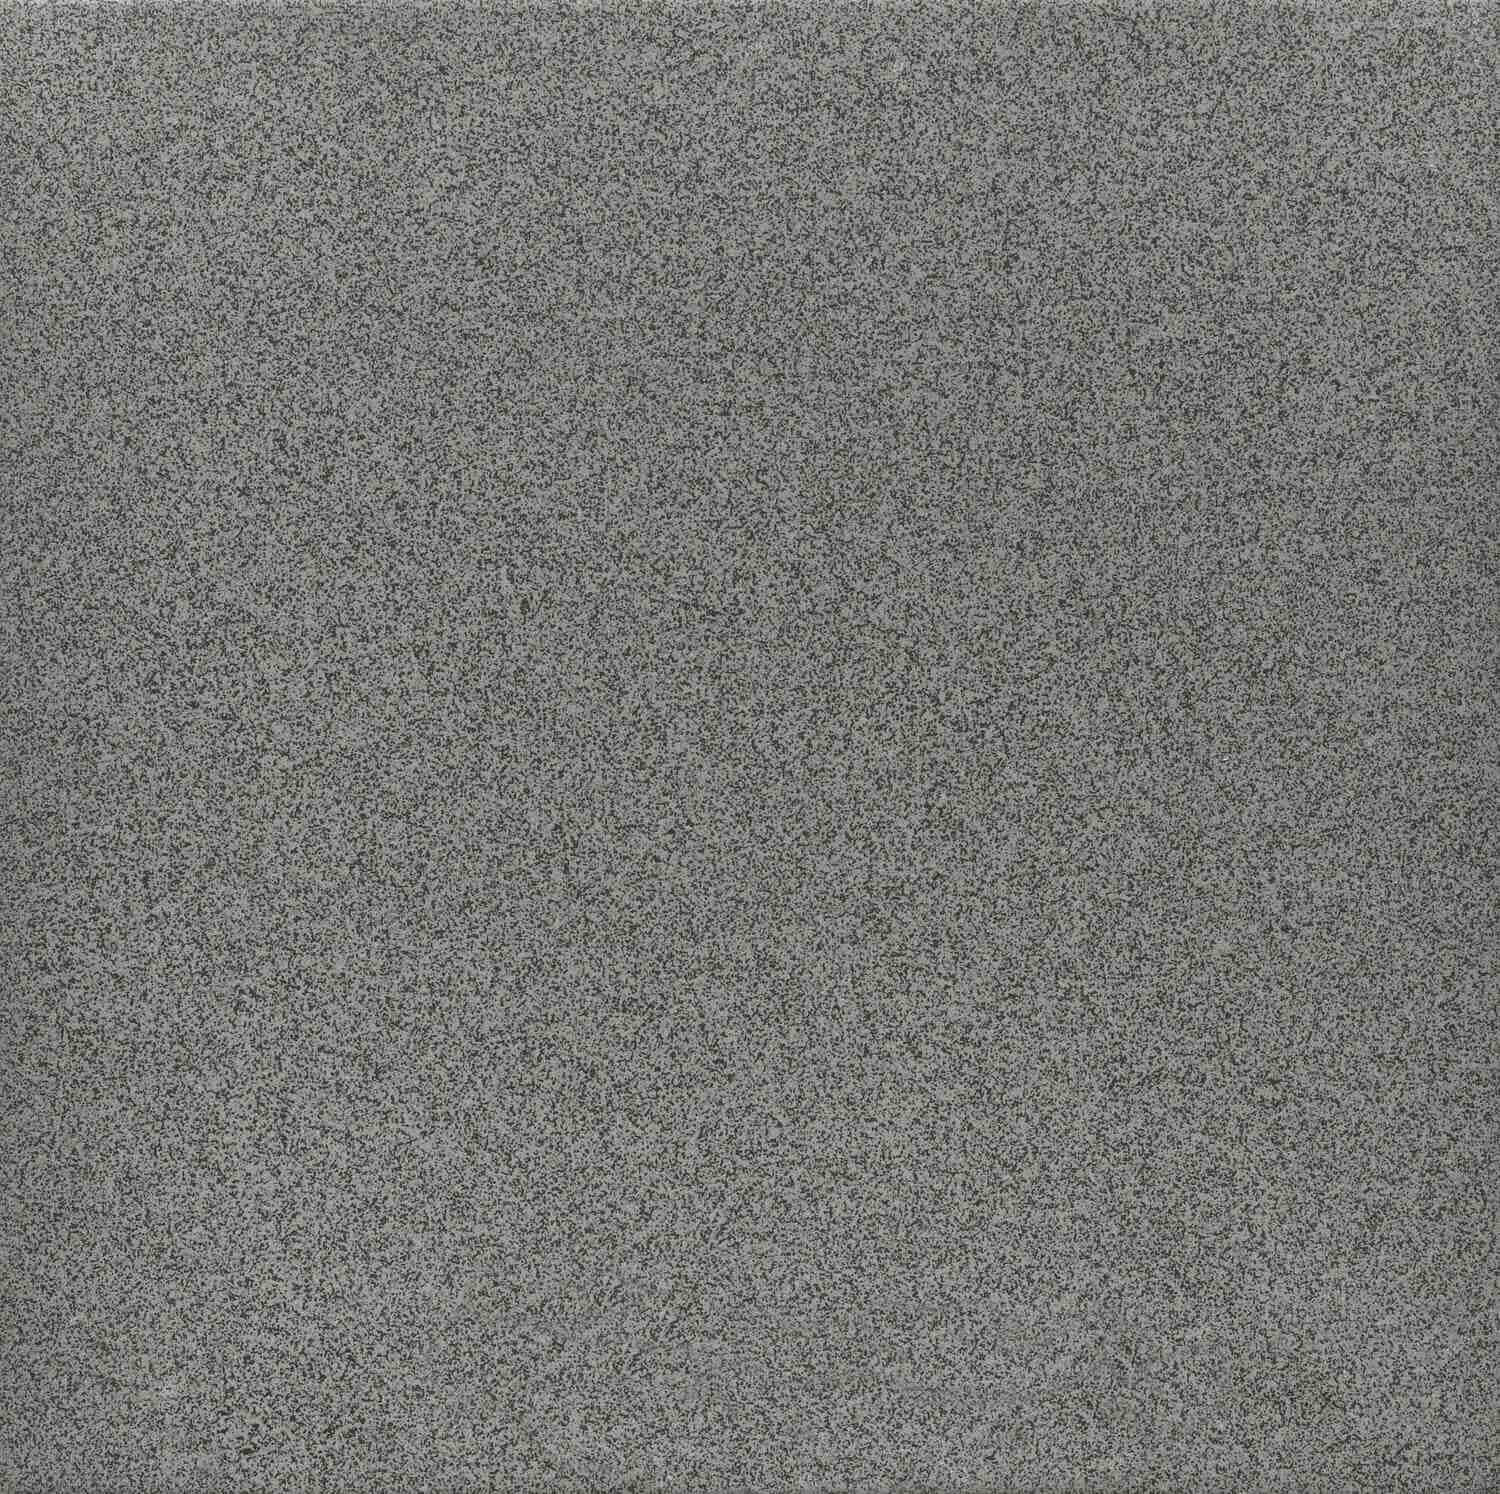 Dorset Woolliscroft Flat Dark Grey Slip Resistant Quarry Tile 300x300mm